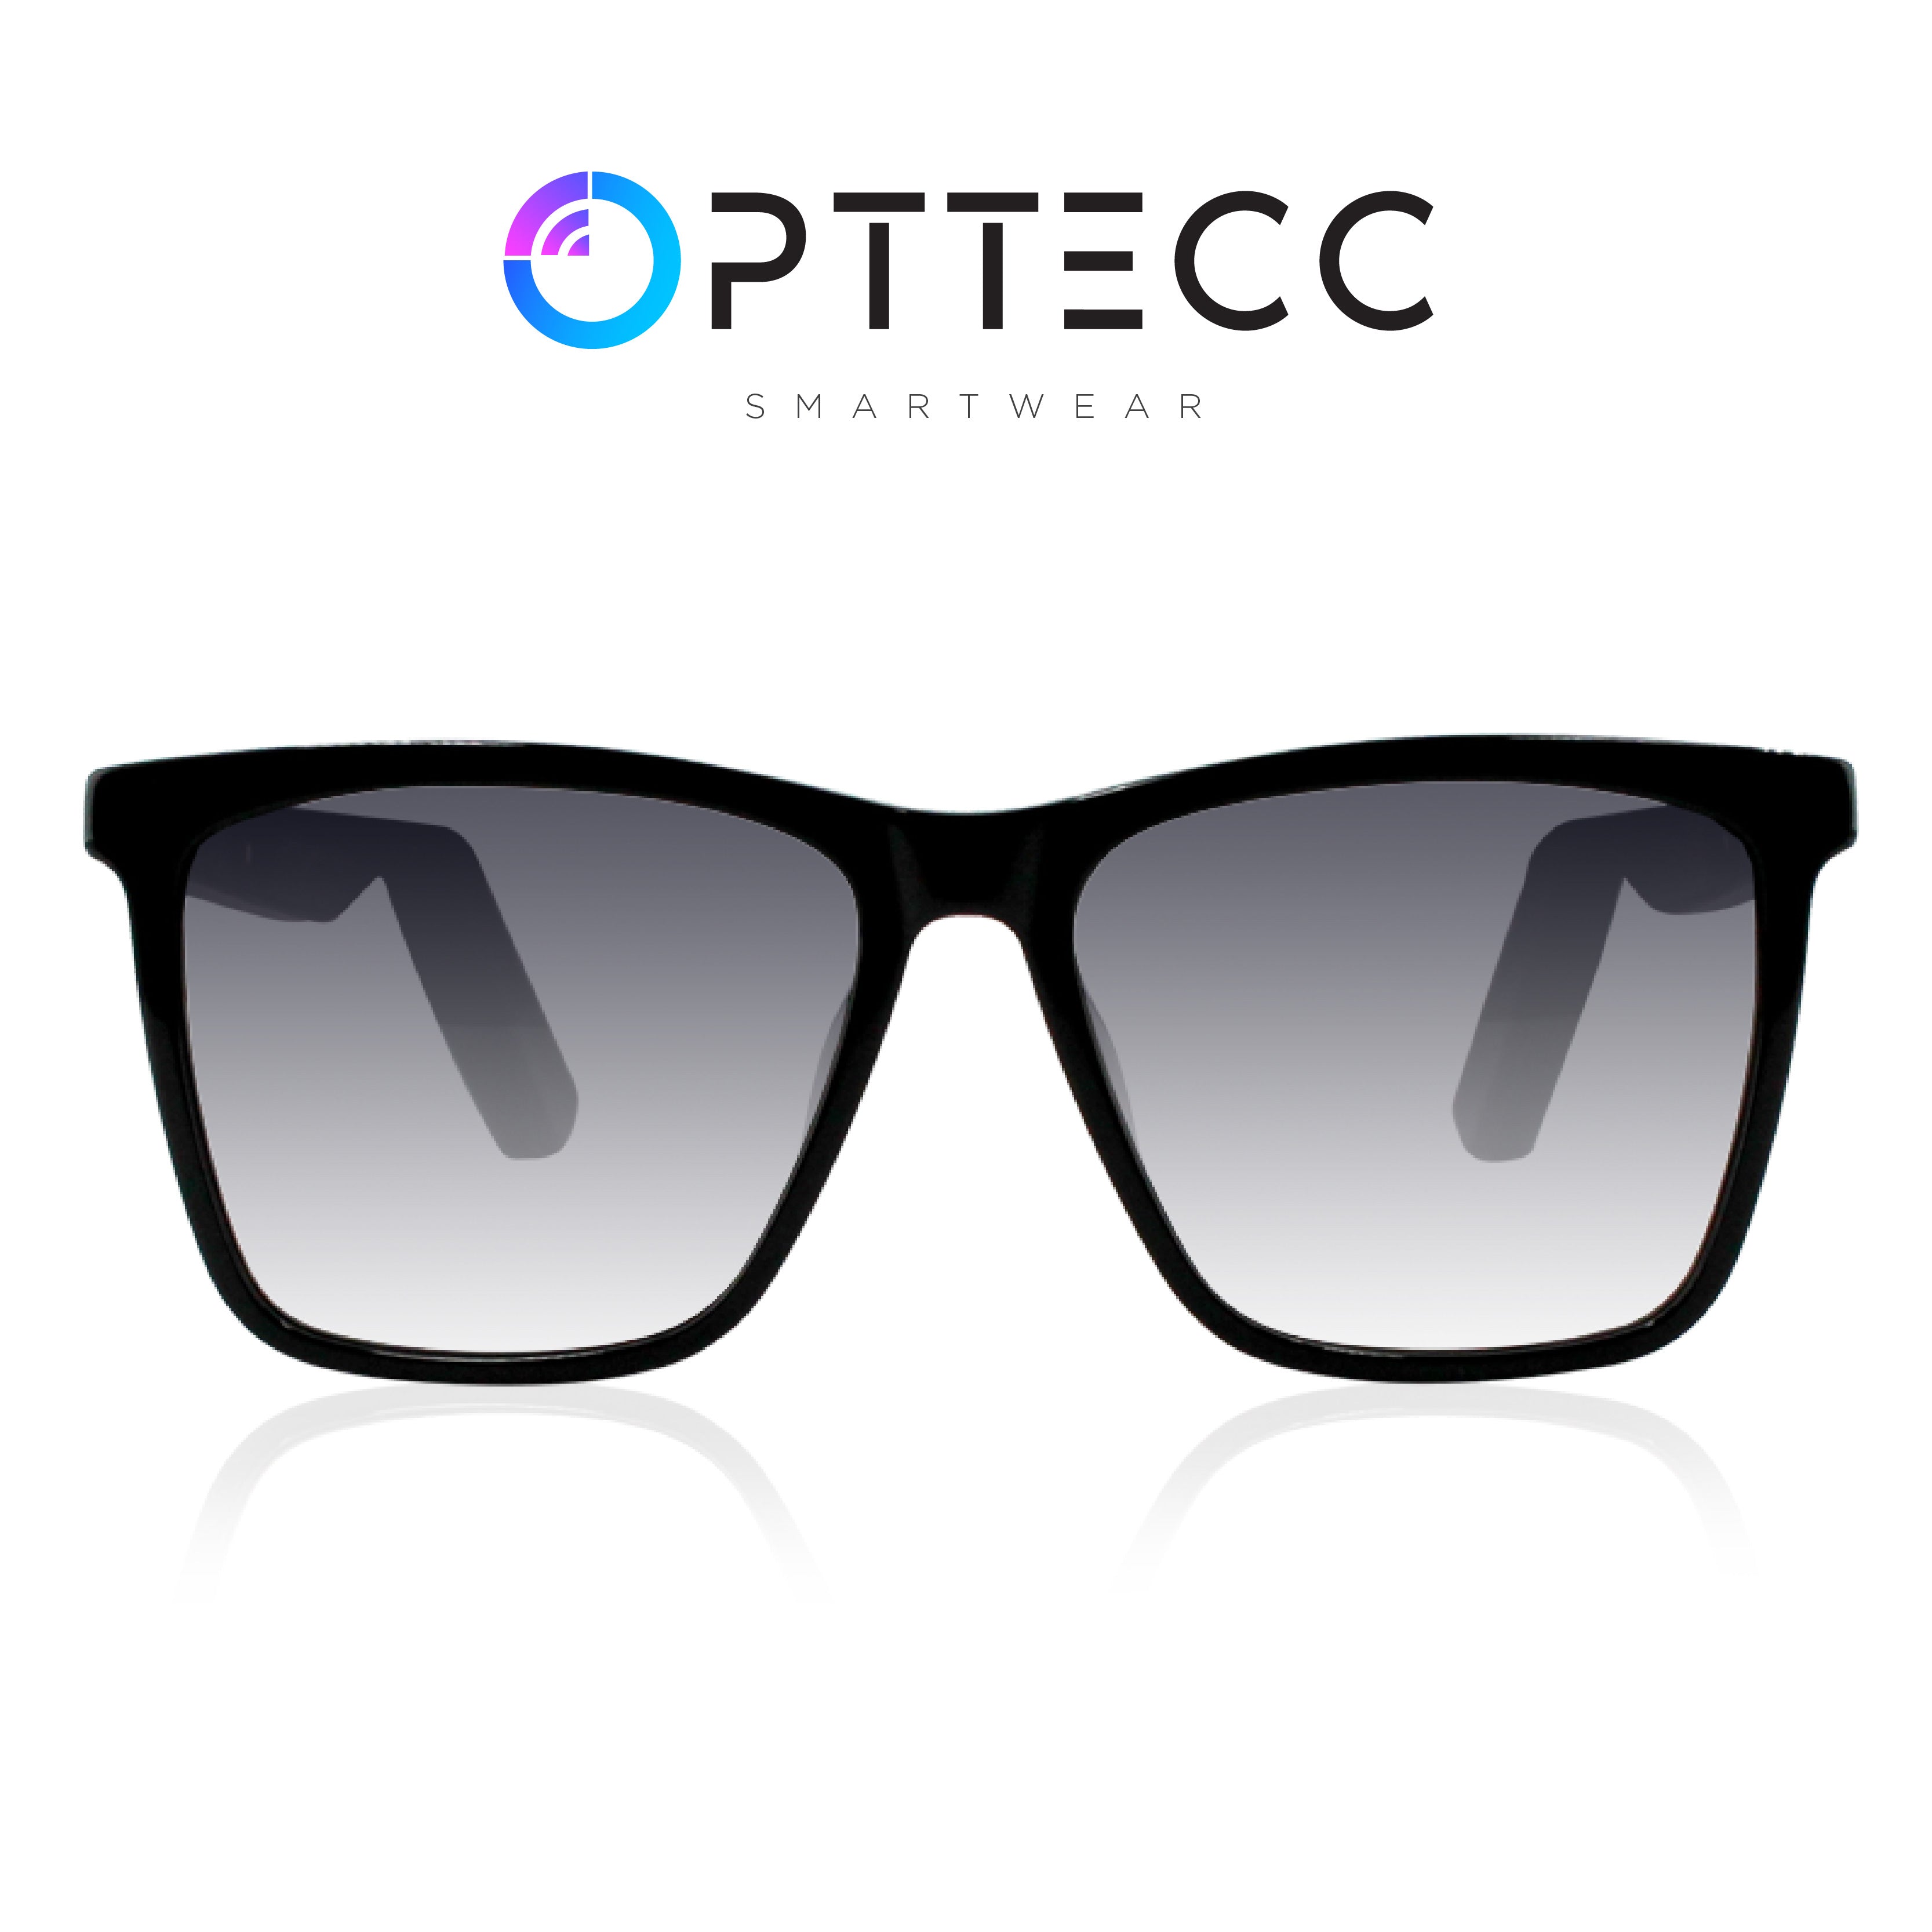 Opttecc Smartwear